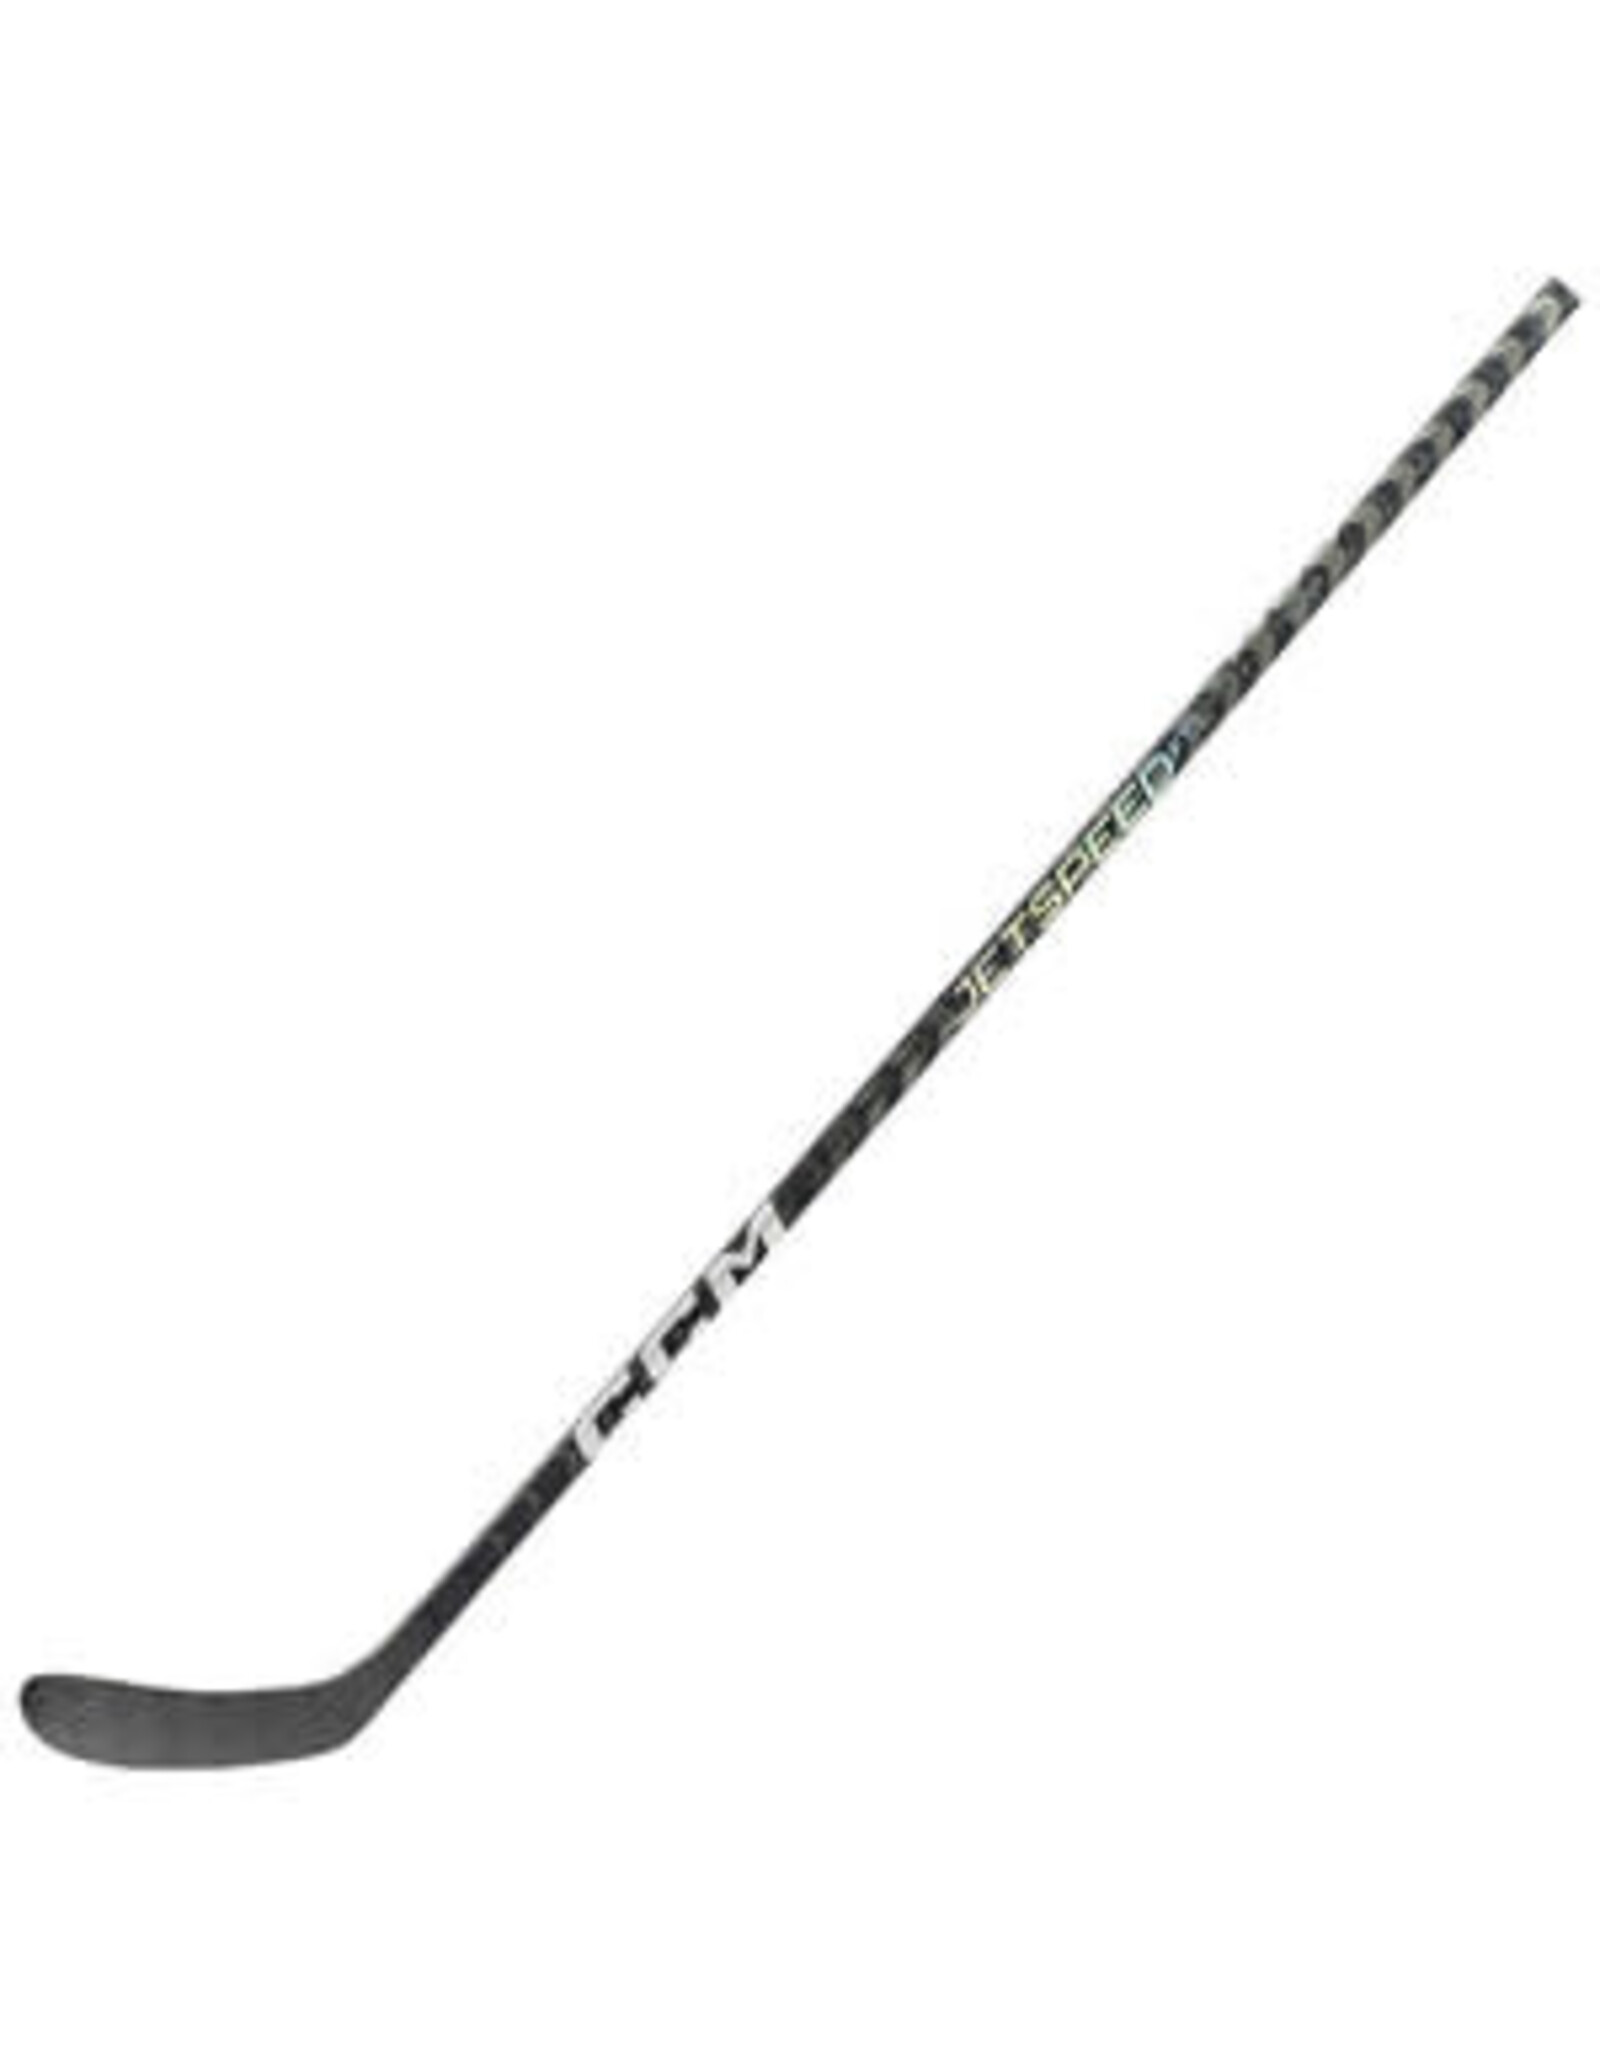 CCM CCM FT5 Pro Hockey Stick Senior Chrome